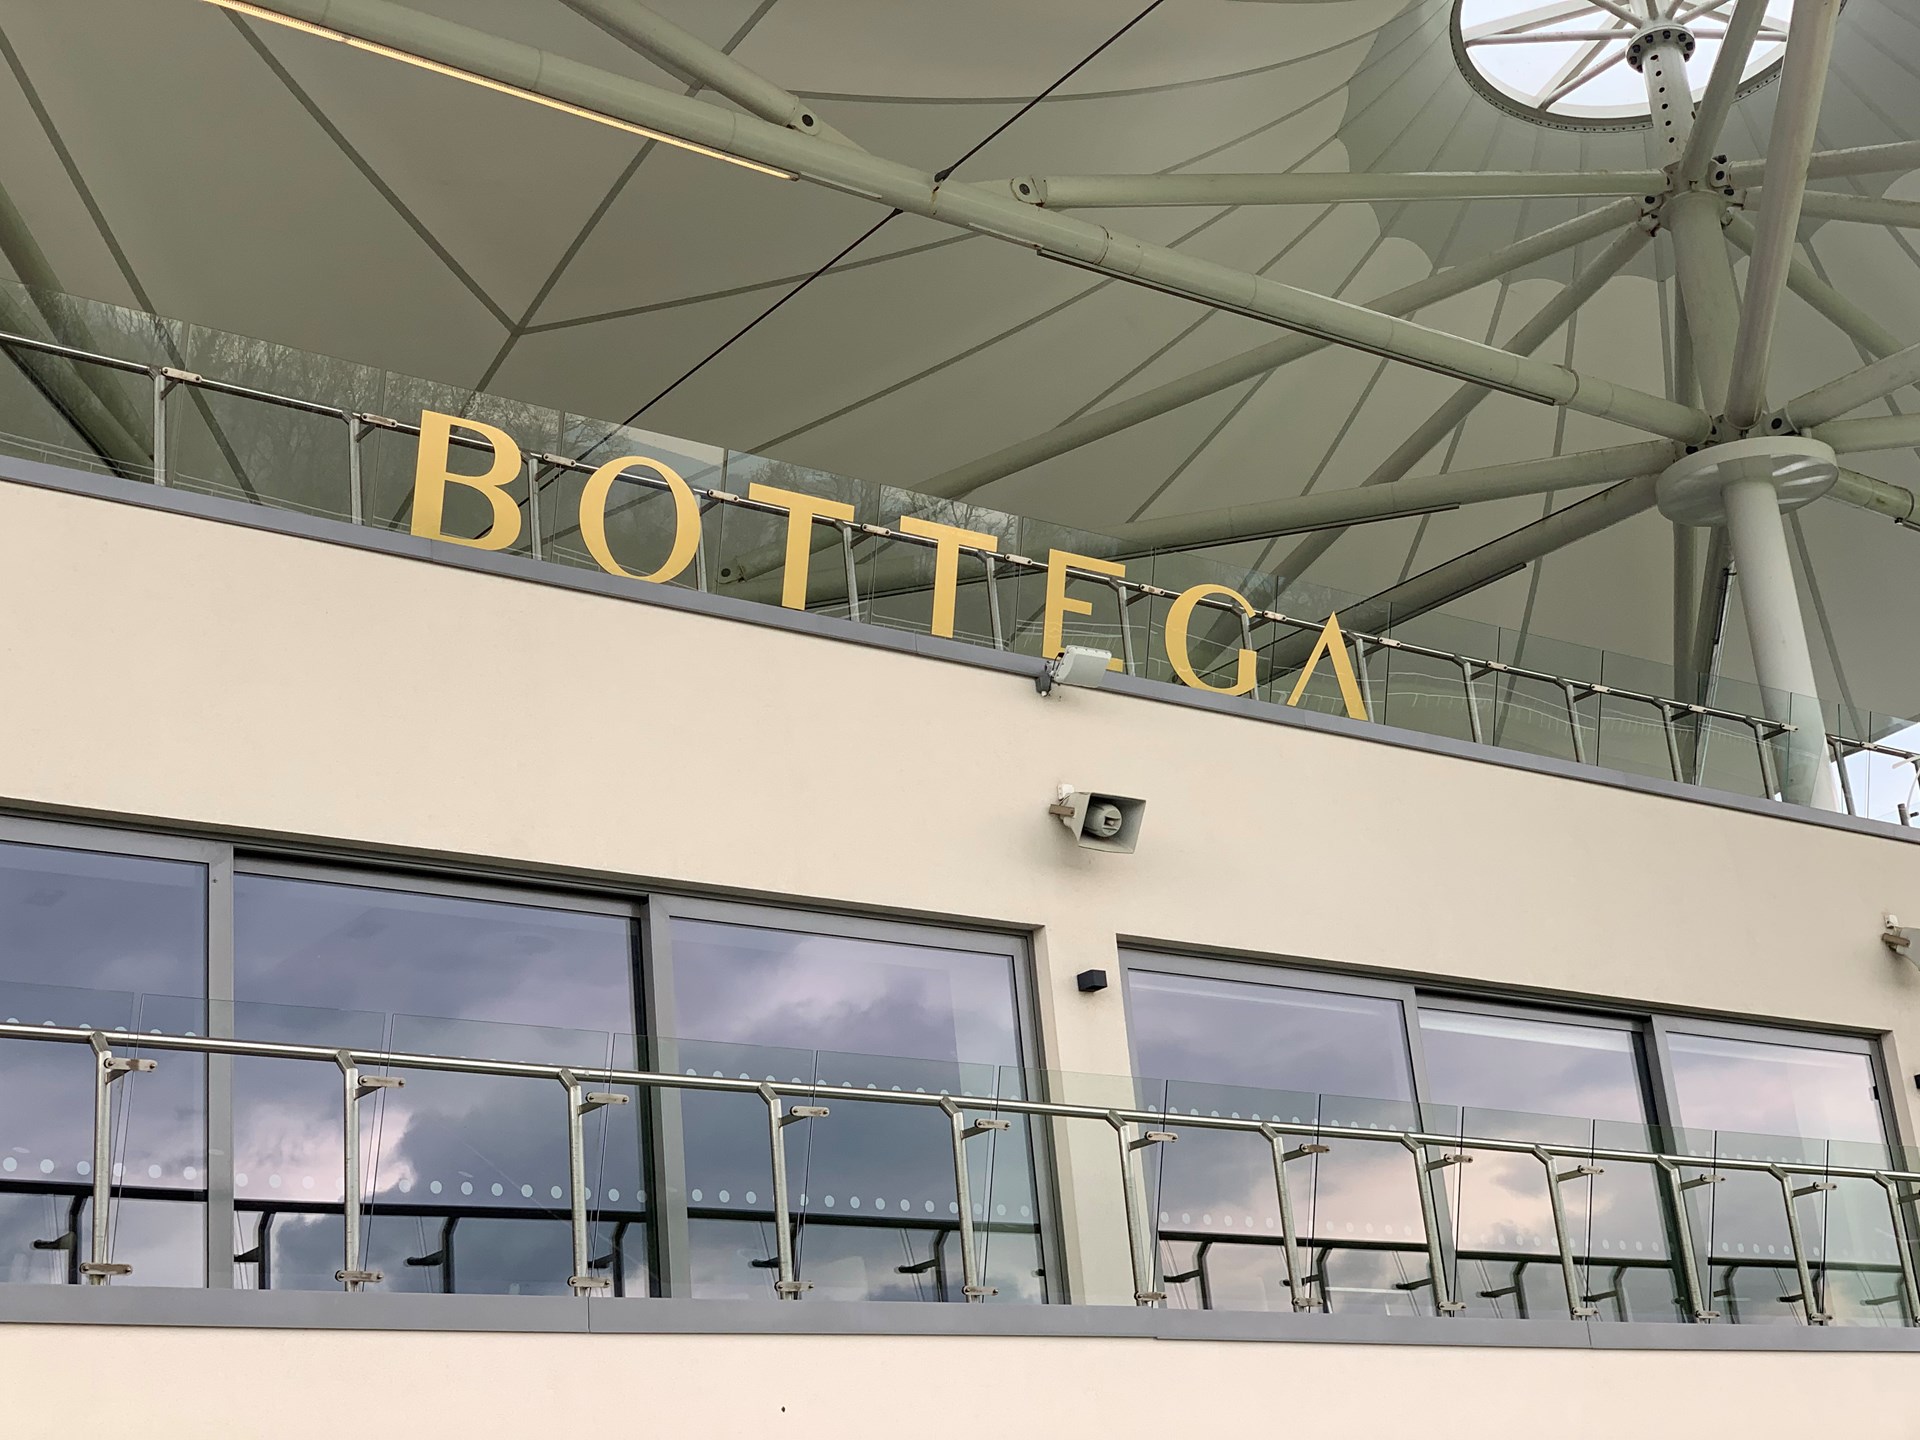 Bath Racecourse Bottega Mirror Gold Flat Cut Acrylic Letters (Bath) 1